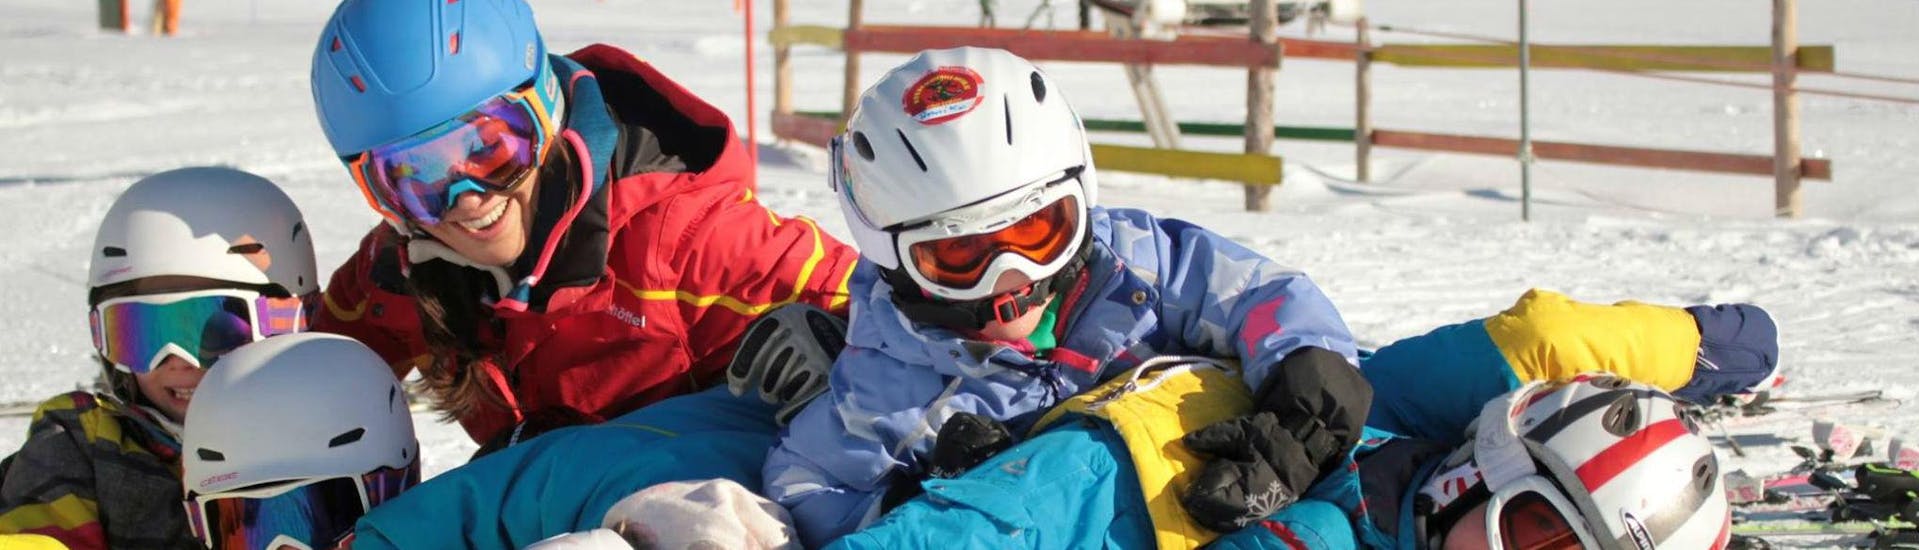 Kids Ski Lessons (3-15 y.) for Beginners - Full-Day with WM Skischool Royer Ramsau - Hero image